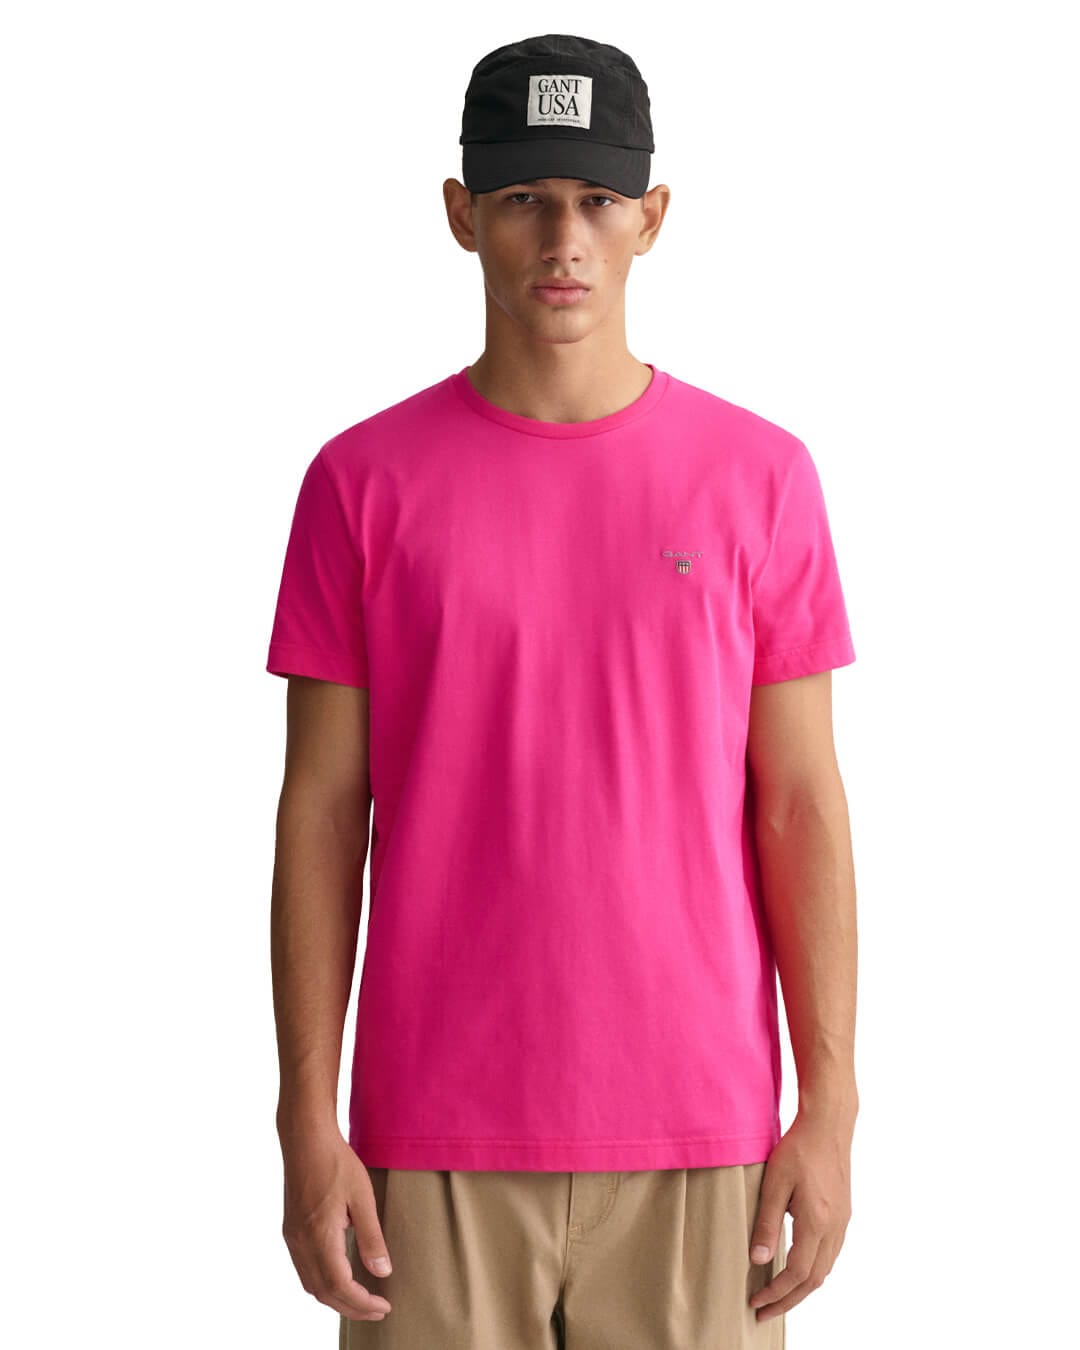 Gant T-Shirts Gant Original Short Sleeved Pink T-Shirt